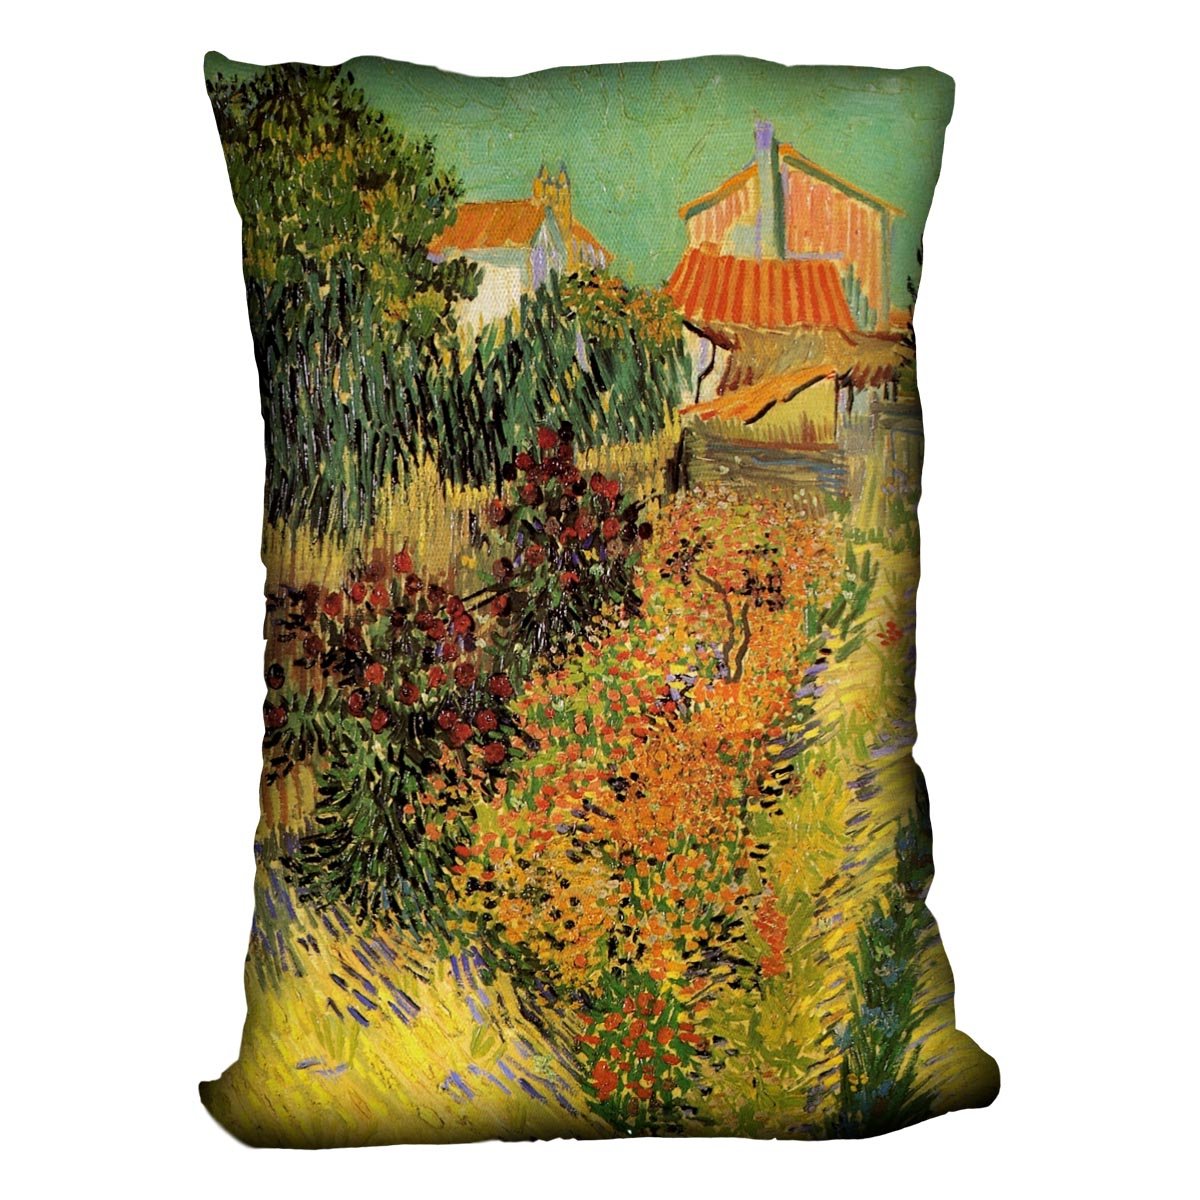 Garden Behind a House by Van Gogh Throw Pillow